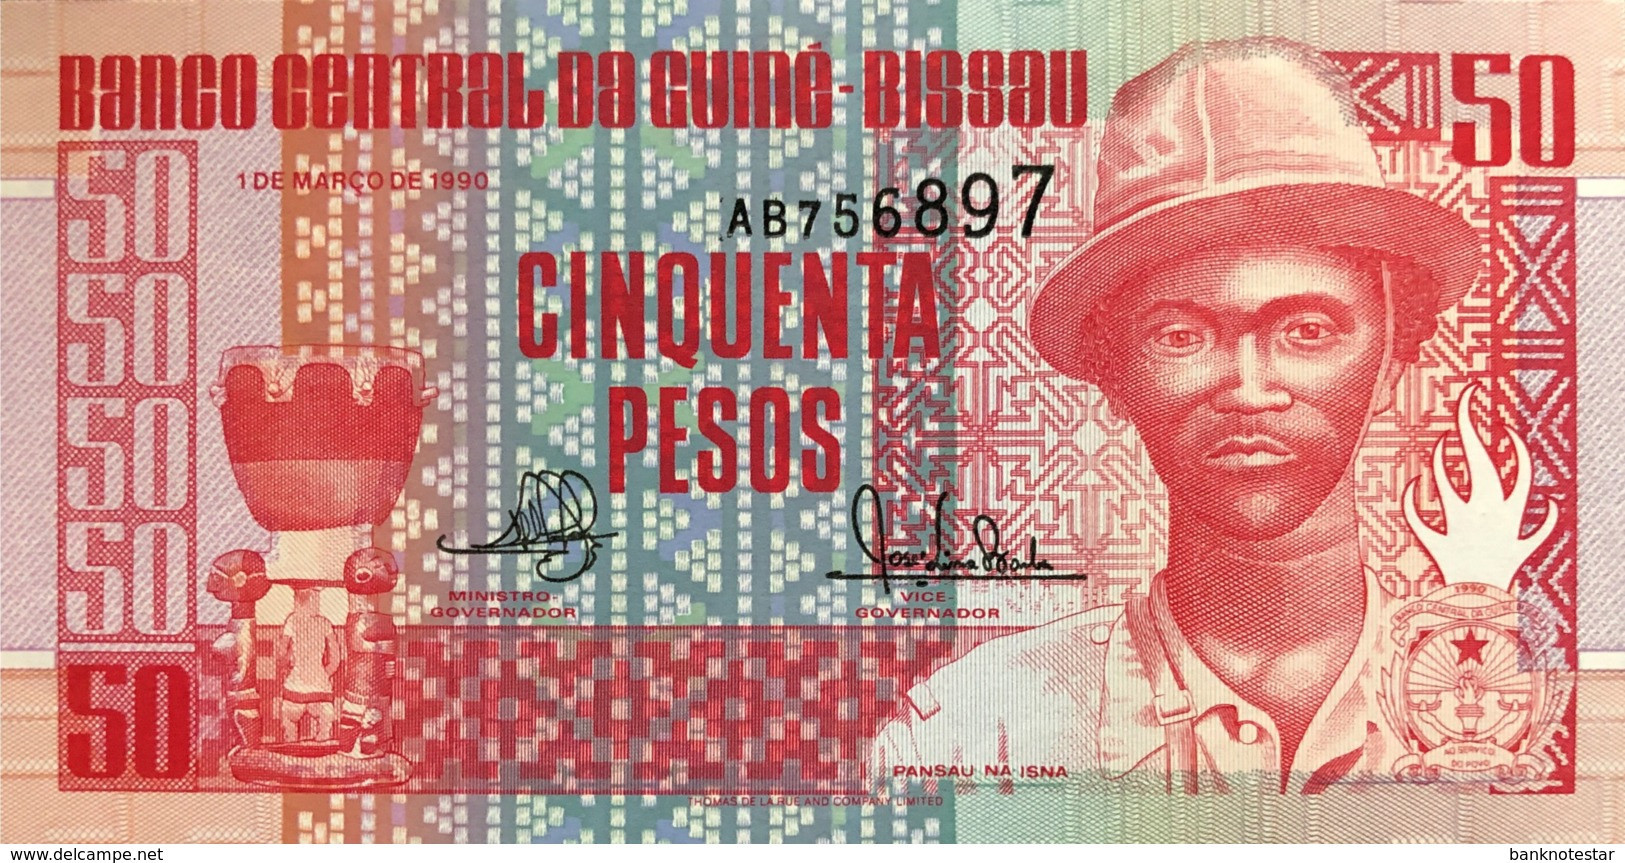 Guinea Bissau 50 Pesos, P-10 (1.3.1990) - UNC - Guinea-Bissau